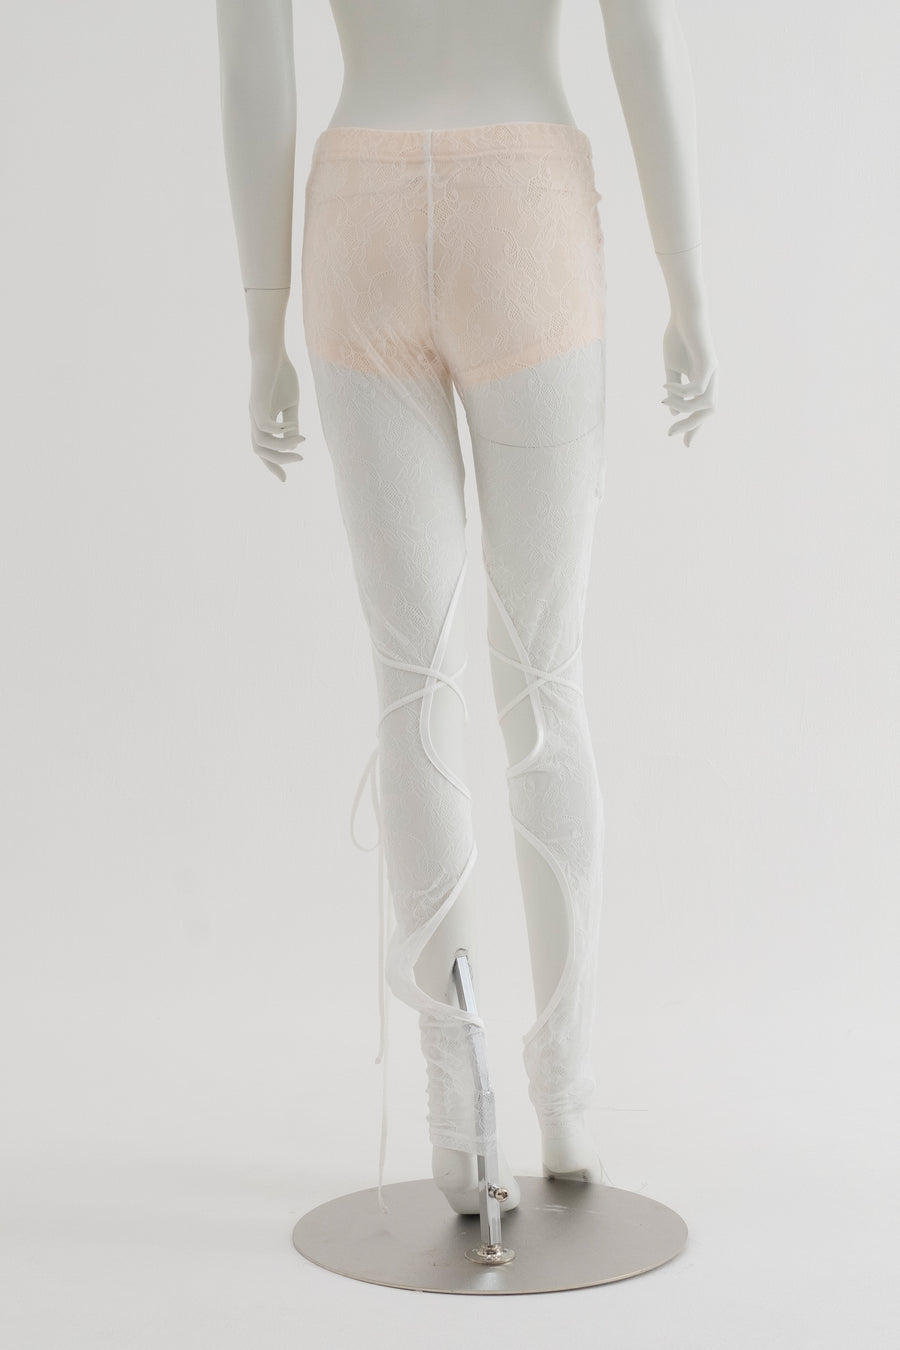 AKIKOAOKI  linge leggings-long-01(WHITE)